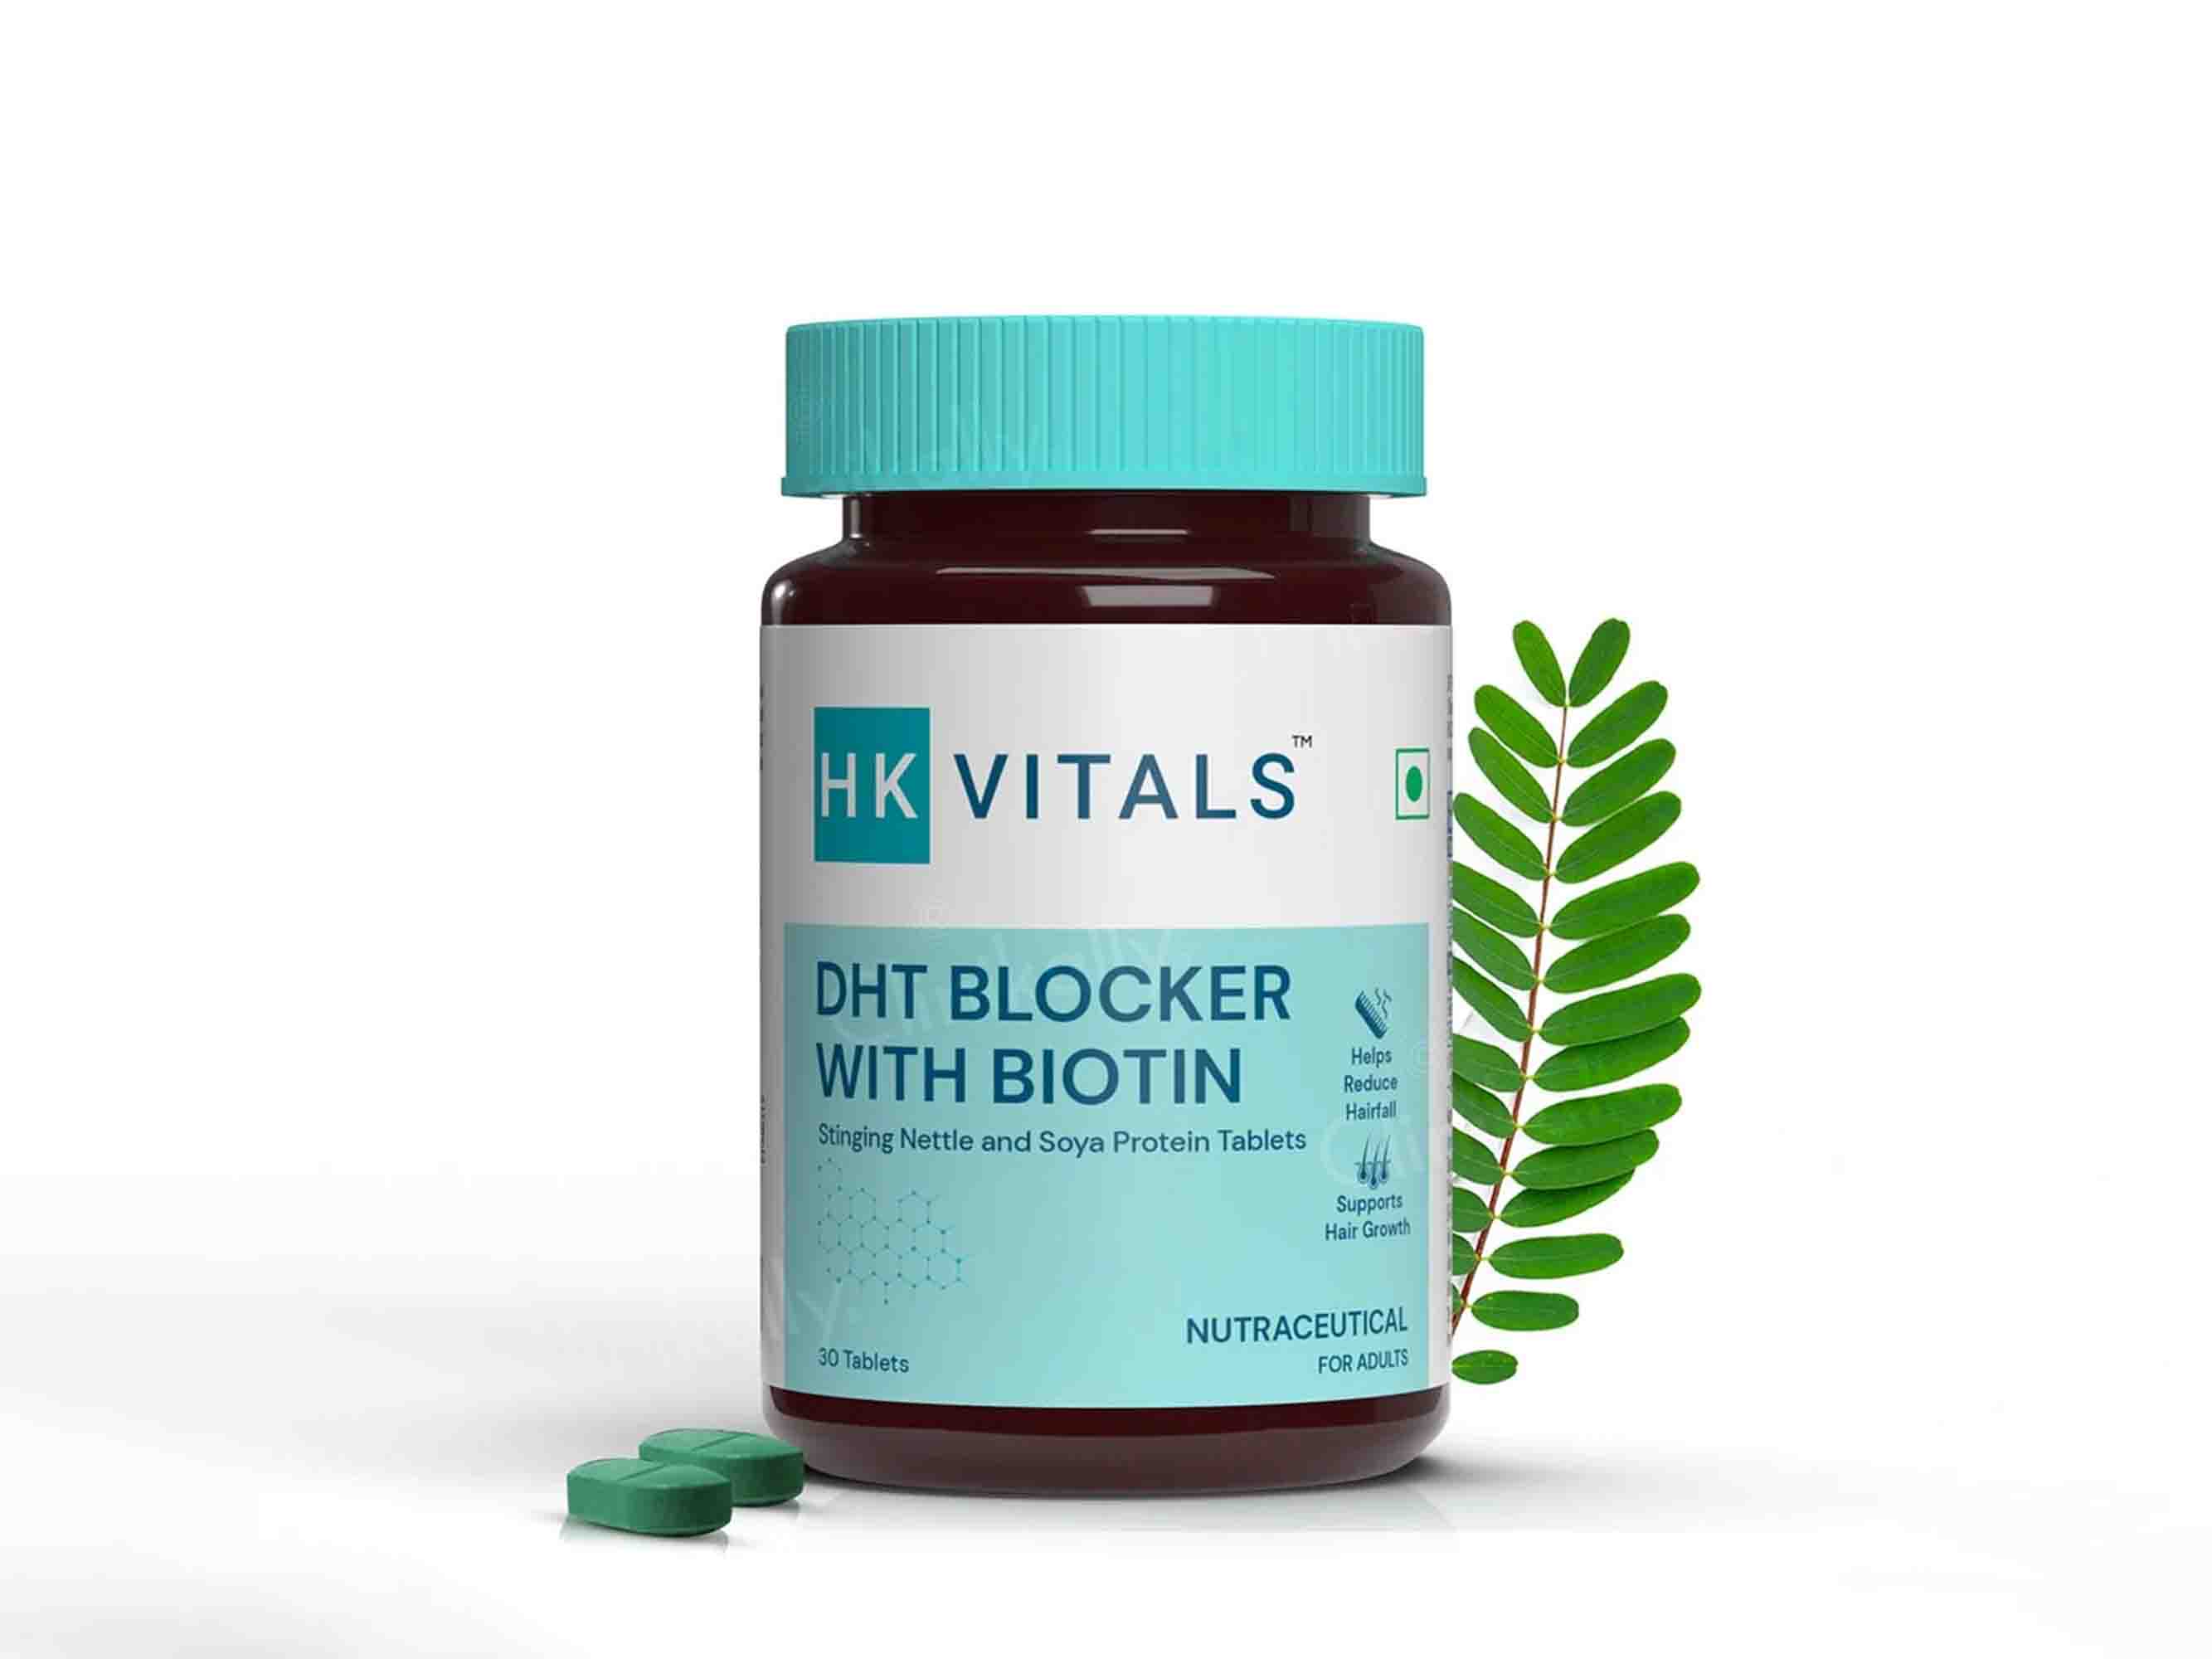 HK Vitals DHT Blocker with Biotin Tablet